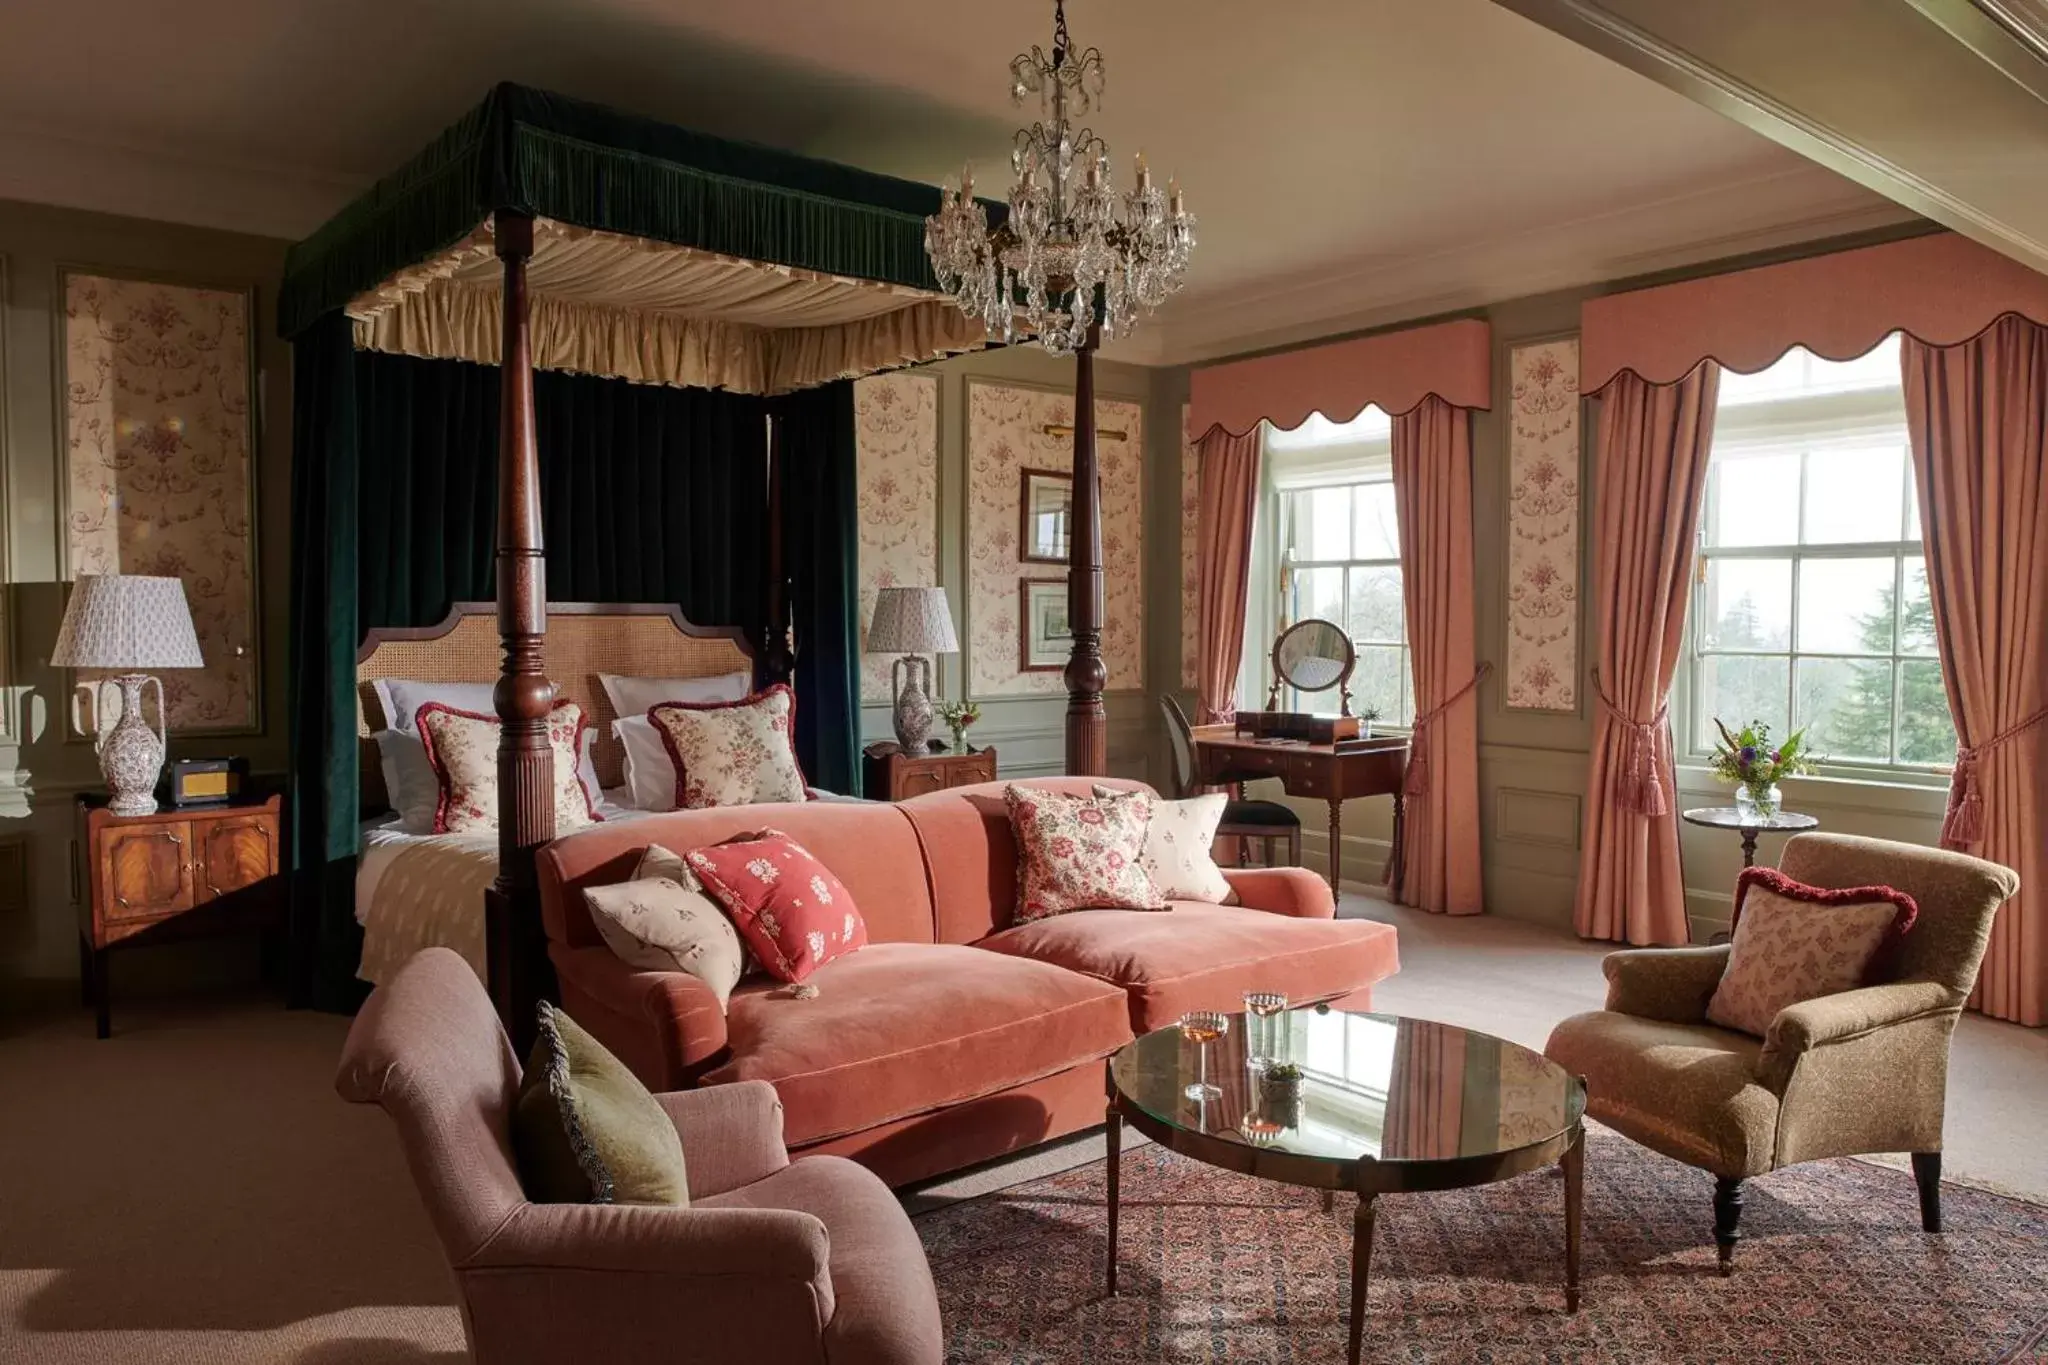 Royal Lochnagar Suite in The Gleneagles Hotel